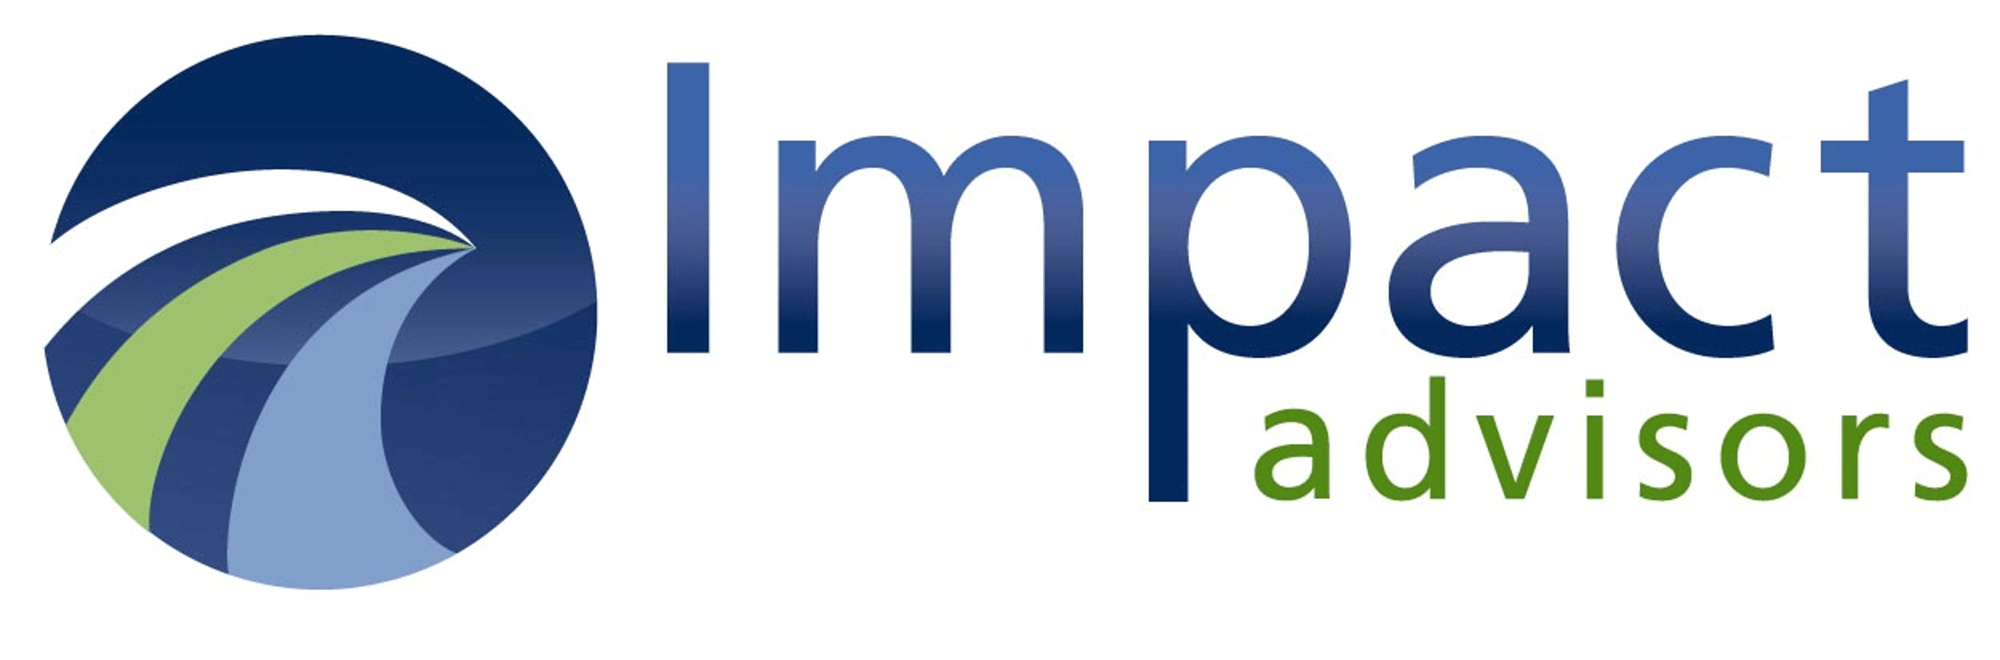 Impact Advisors_logo